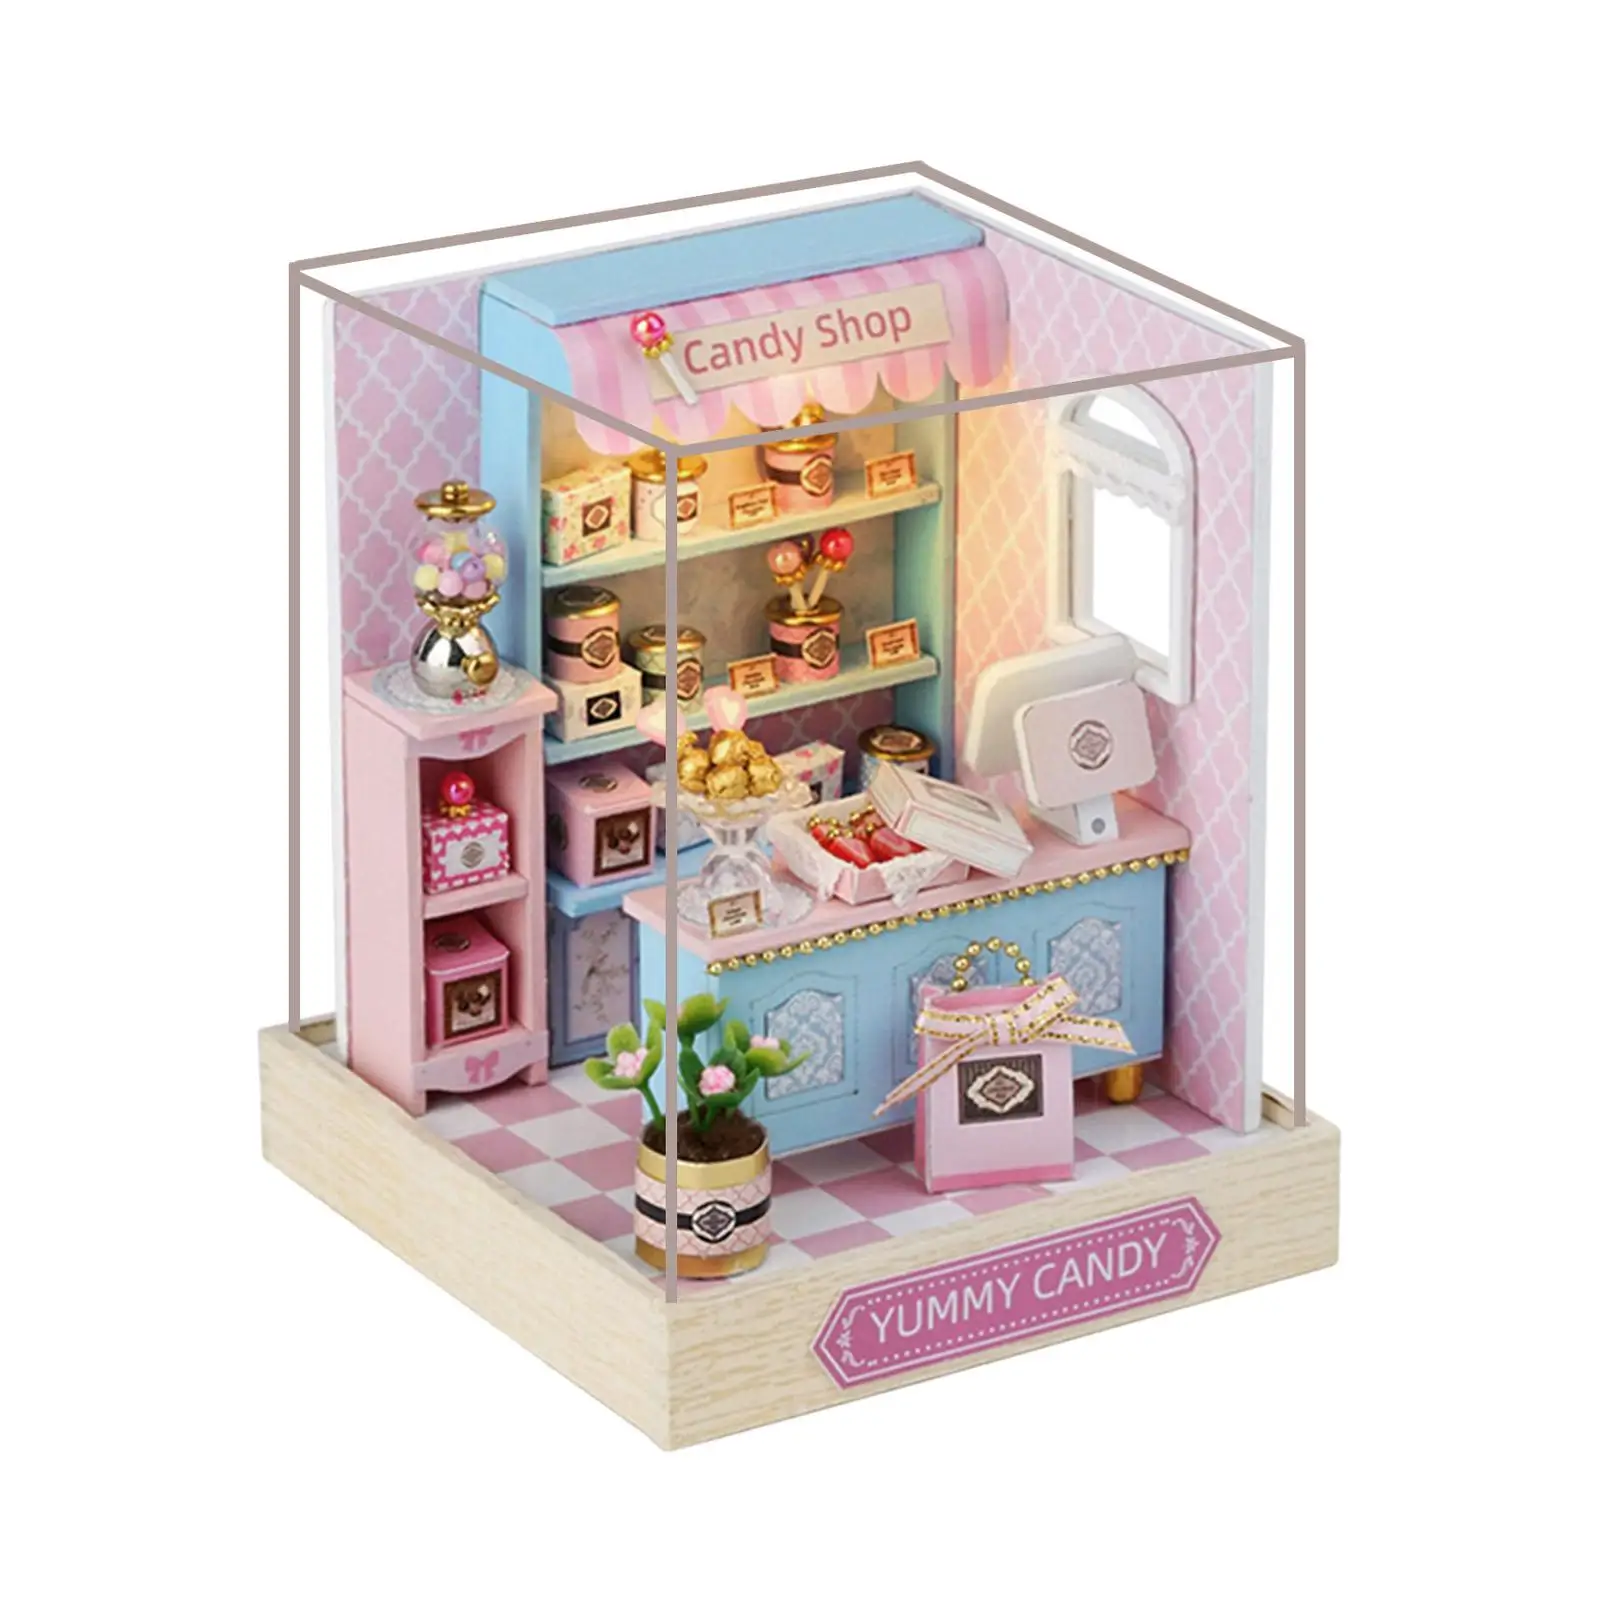 Dollhouse Miniature DIY Kits Mini Handmade House Model for Kids Adults